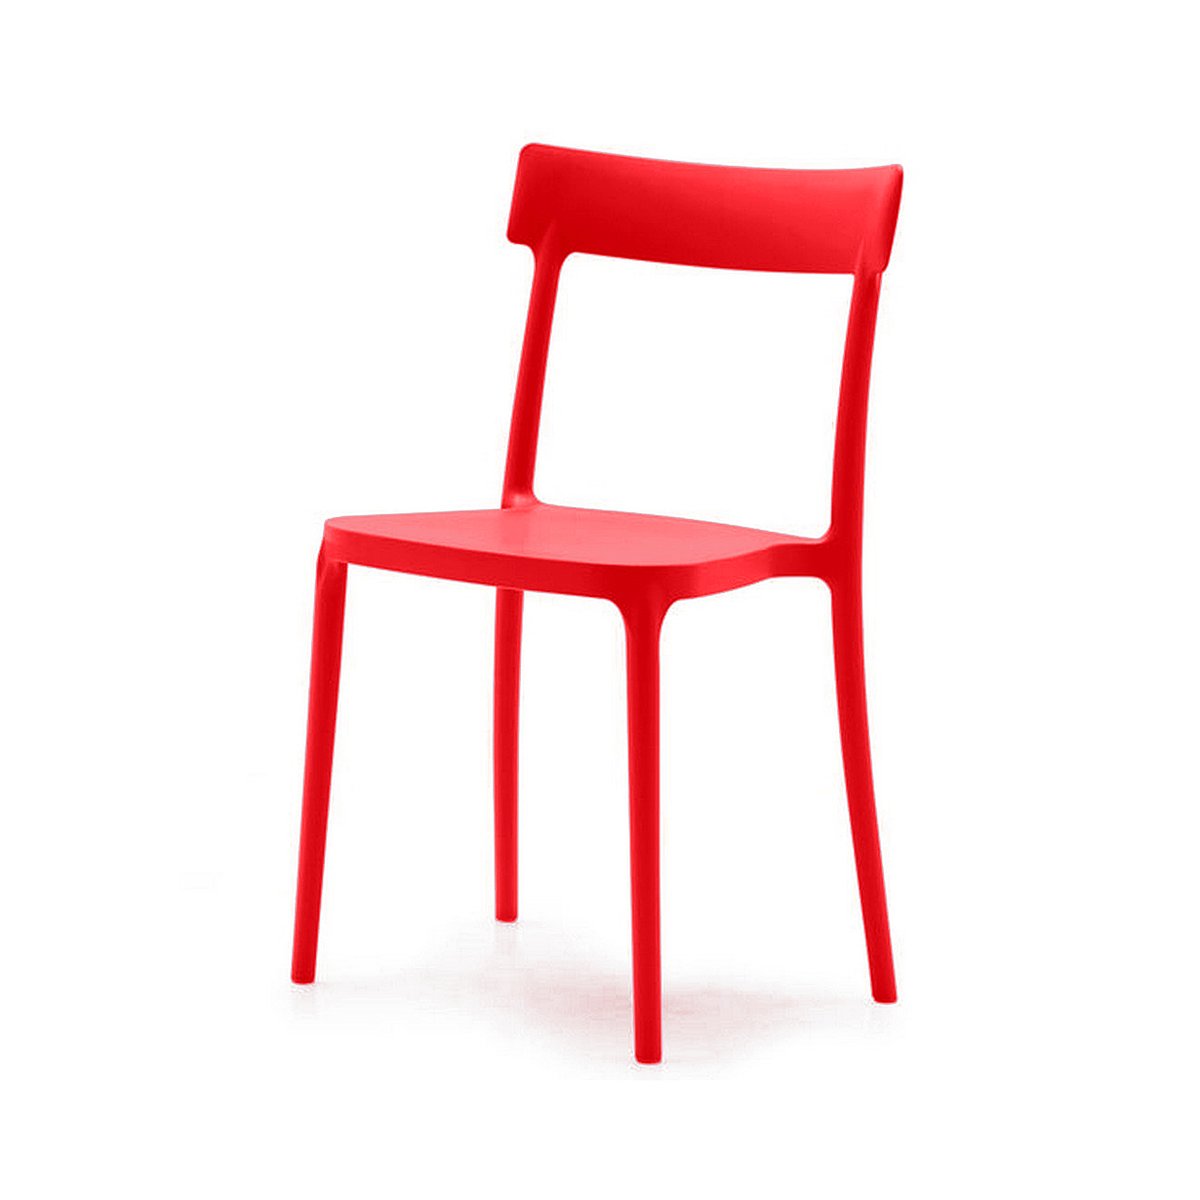 Calligaris Connubia Garden Chair Argo 1523 Stool Outdoor suitable stackable